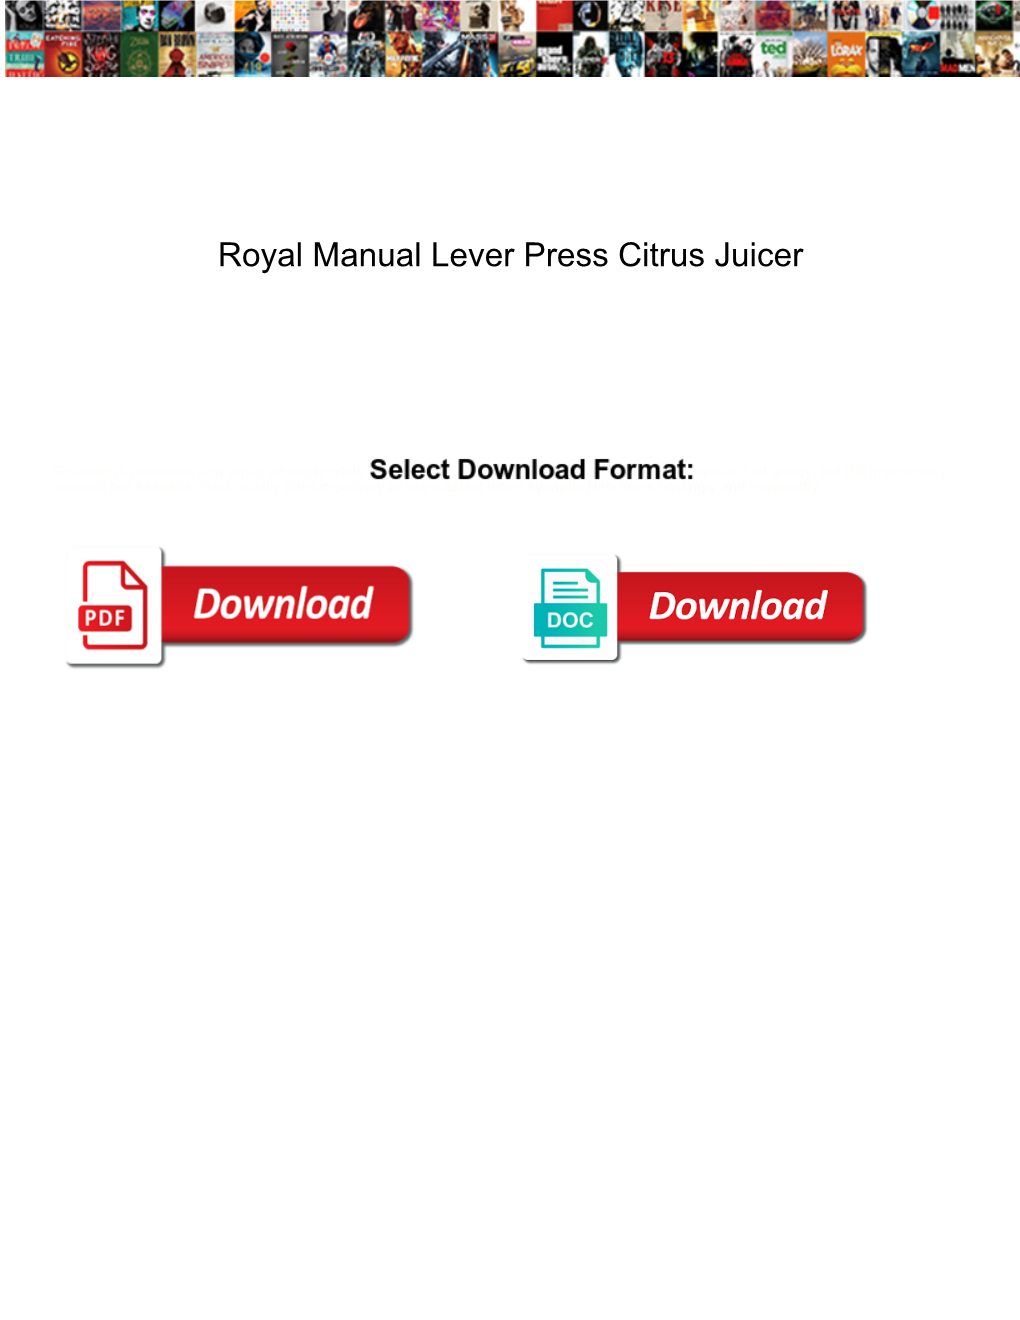 Royal Manual Lever Press Citrus Juicer